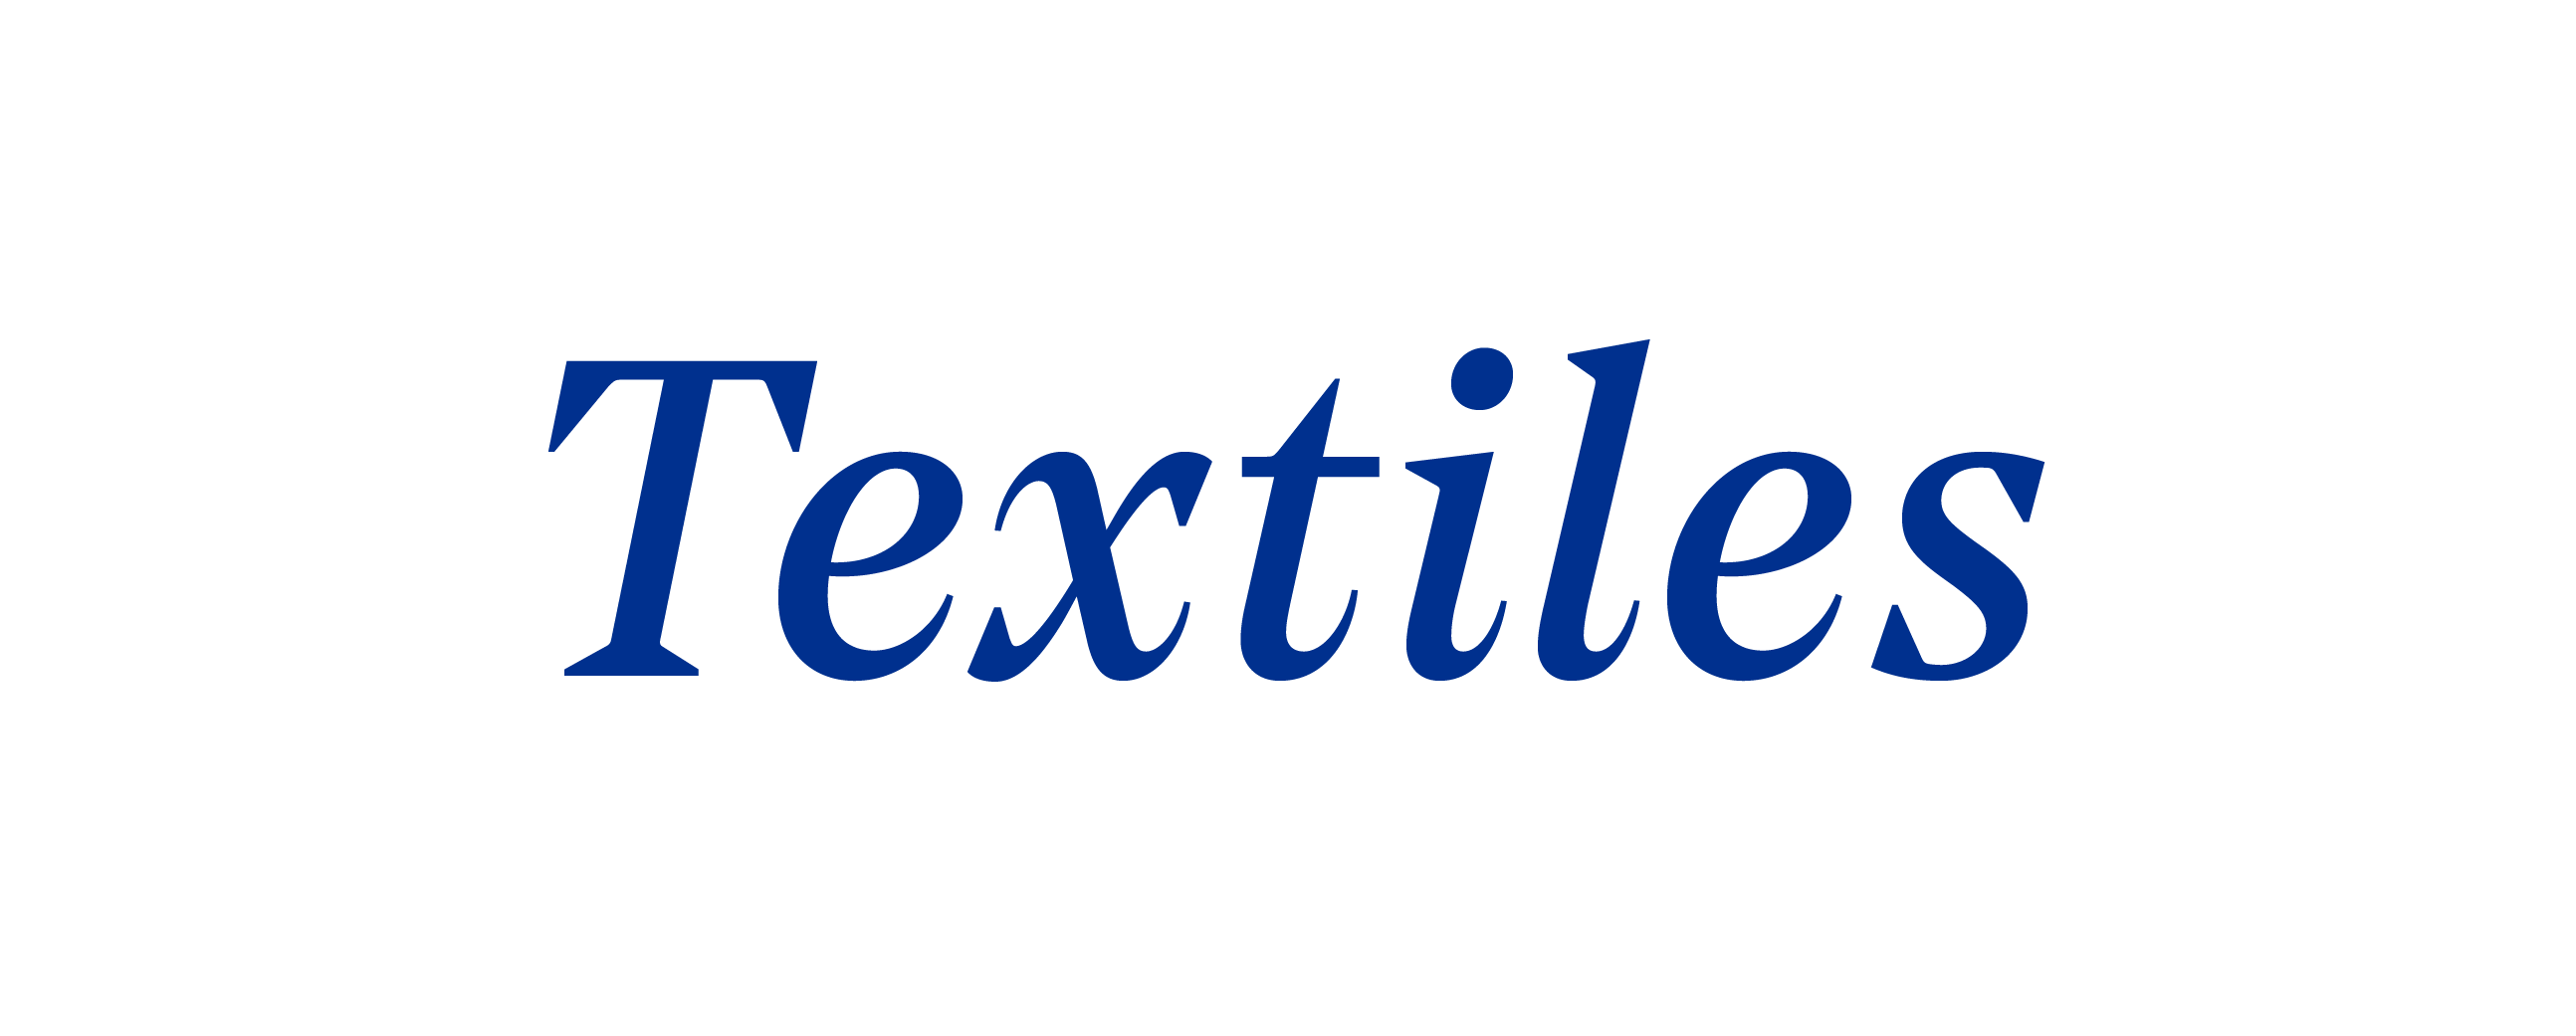 Textiles